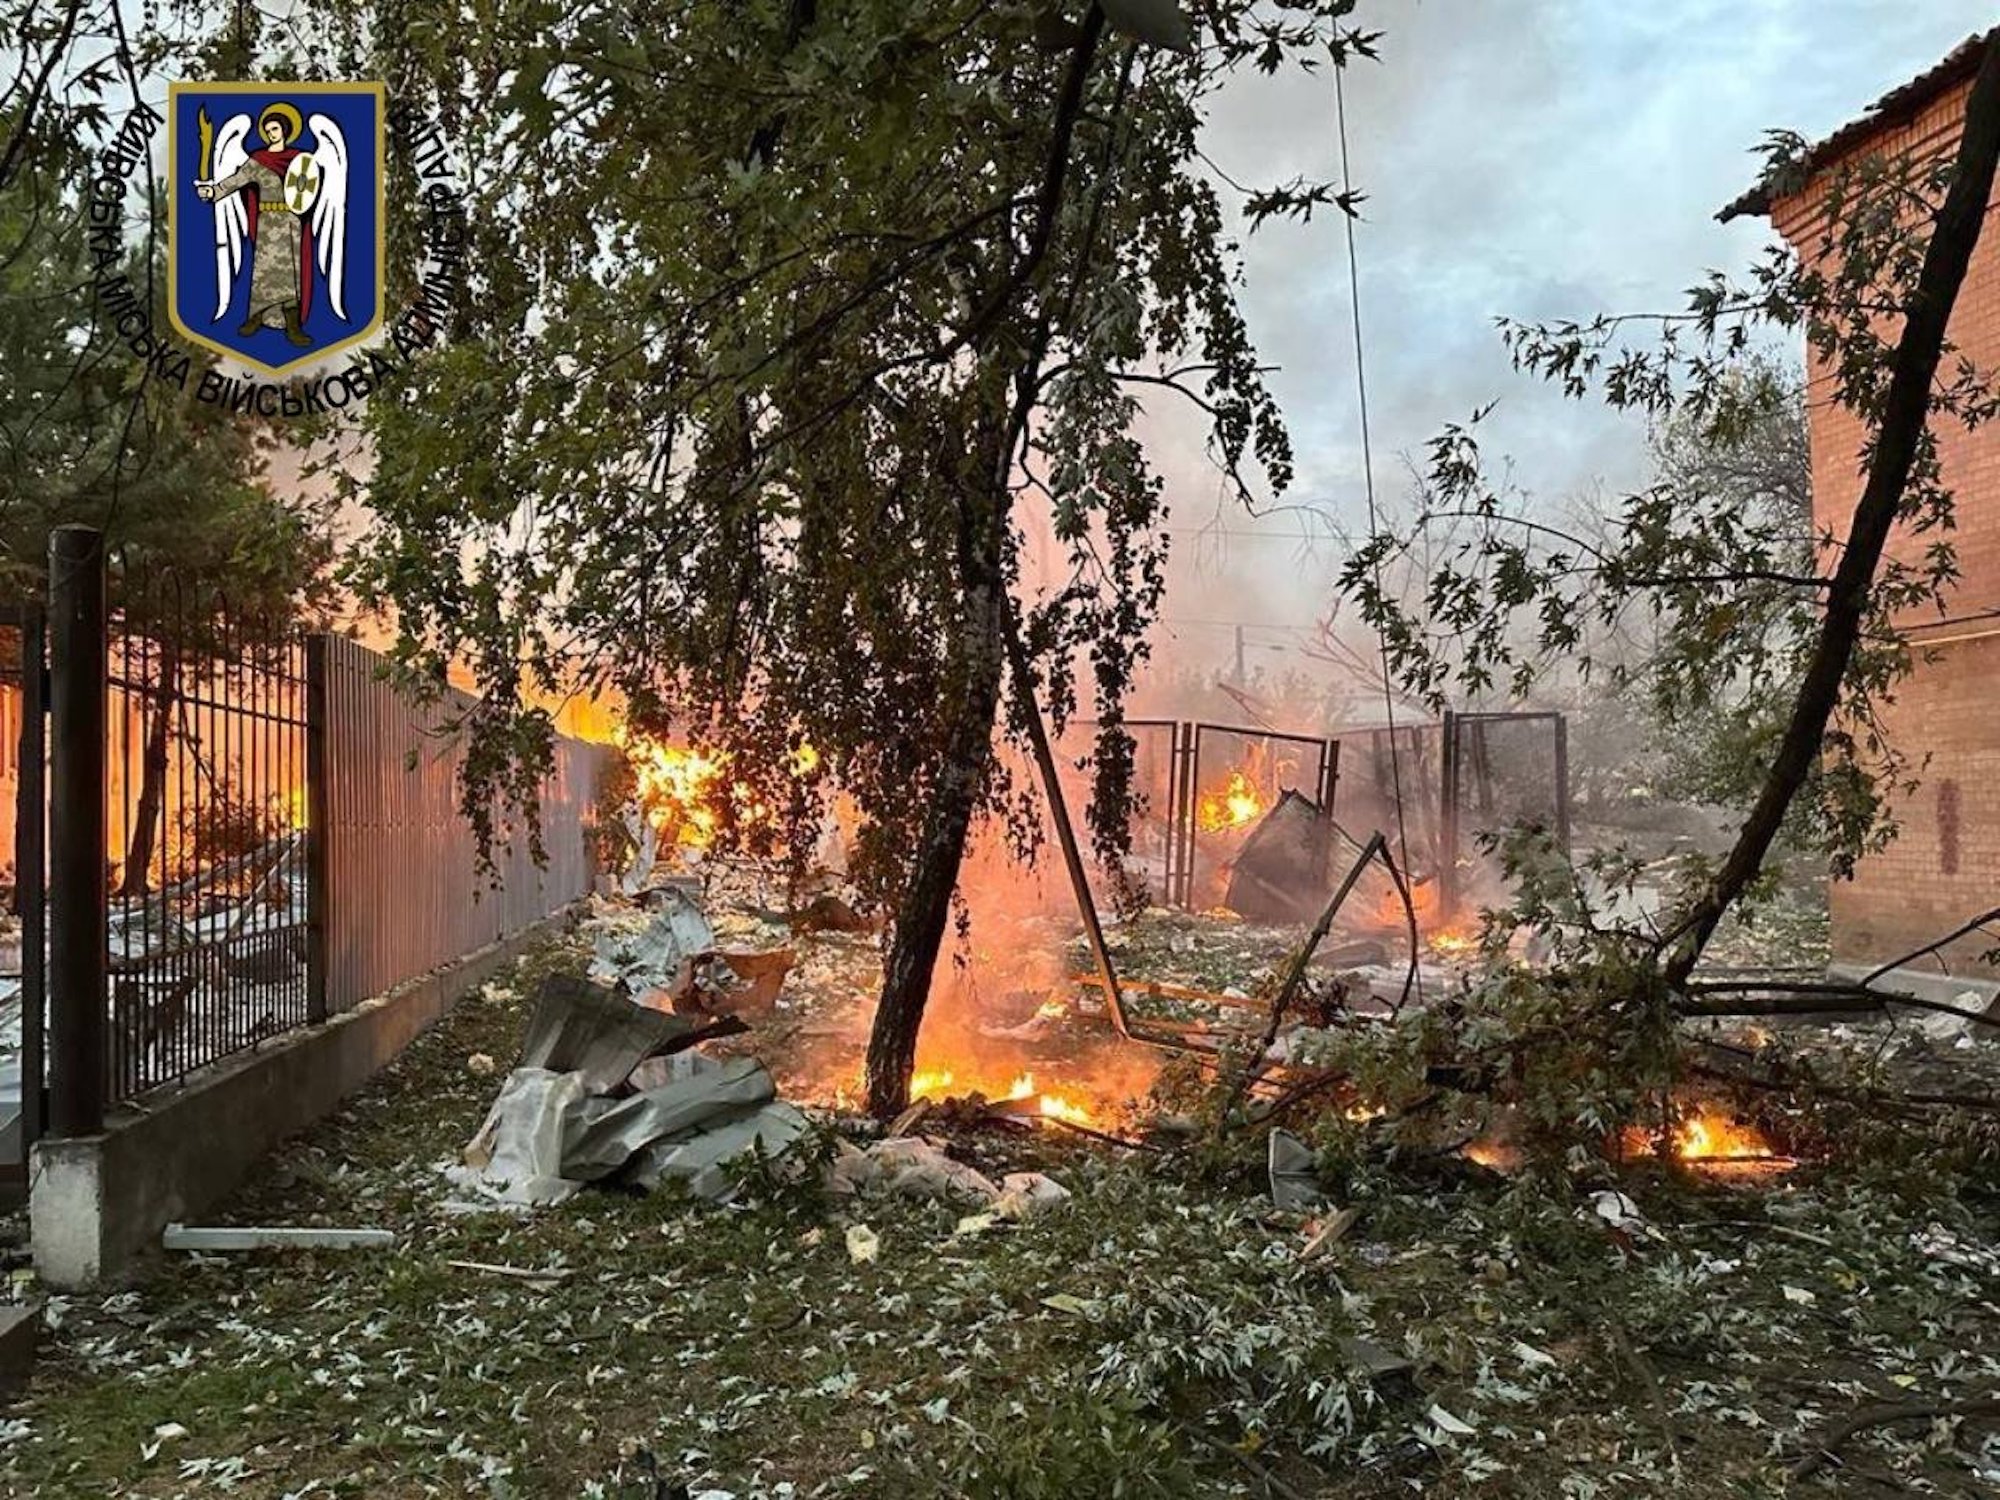 Debris is seen in Kyiv's Darnytskyi district following Russian attacks on Thursday.